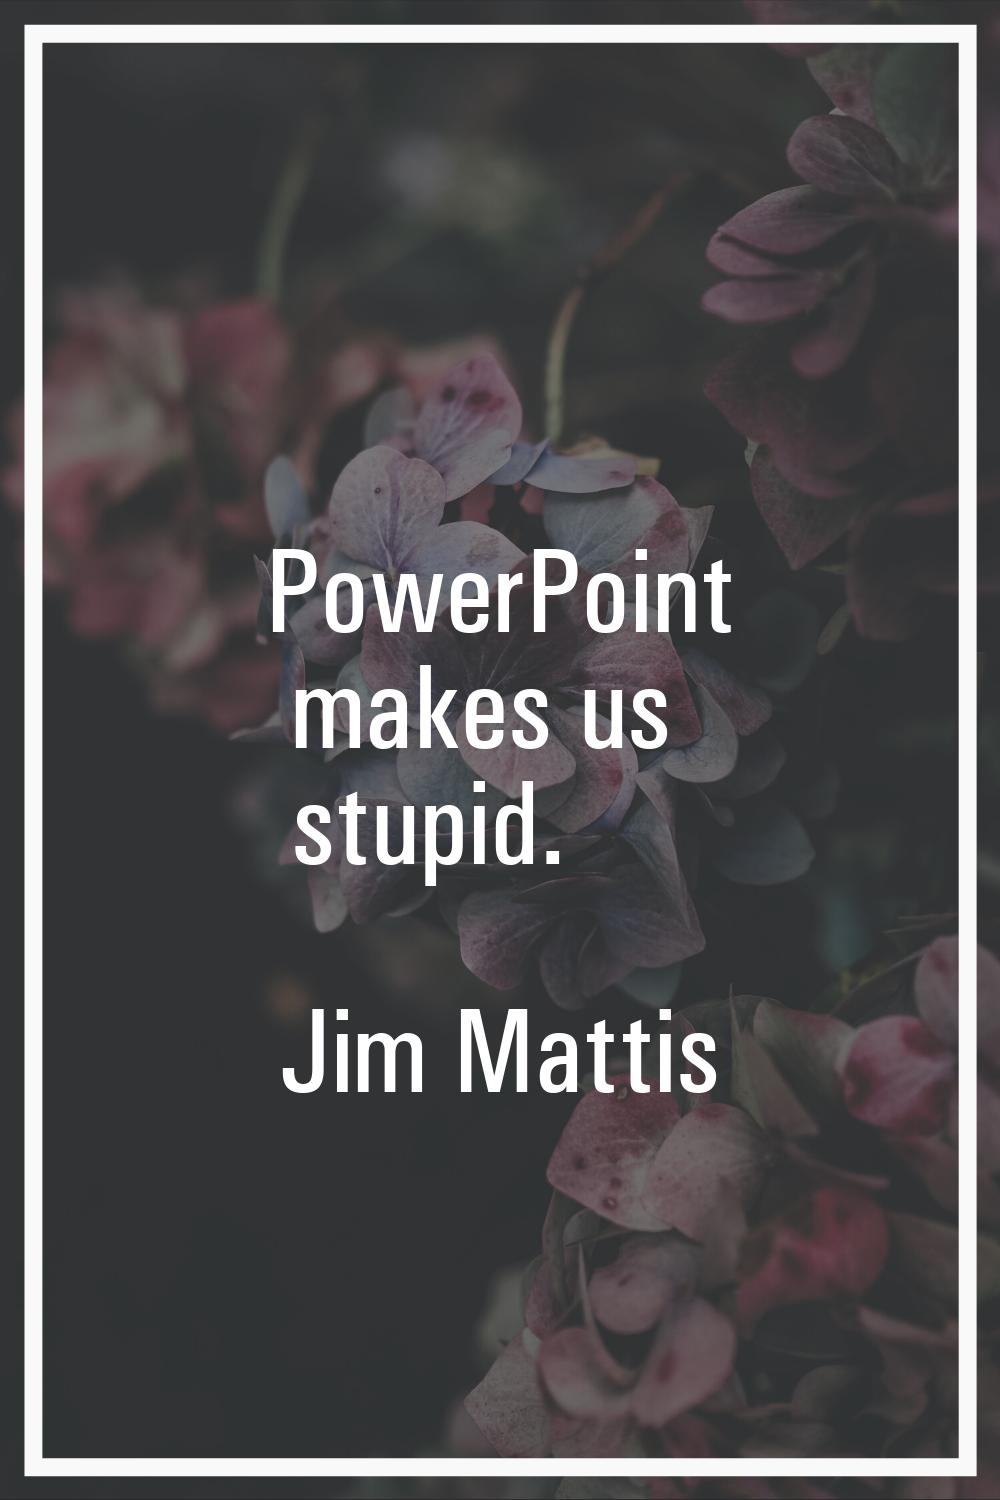 PowerPoint makes us stupid.